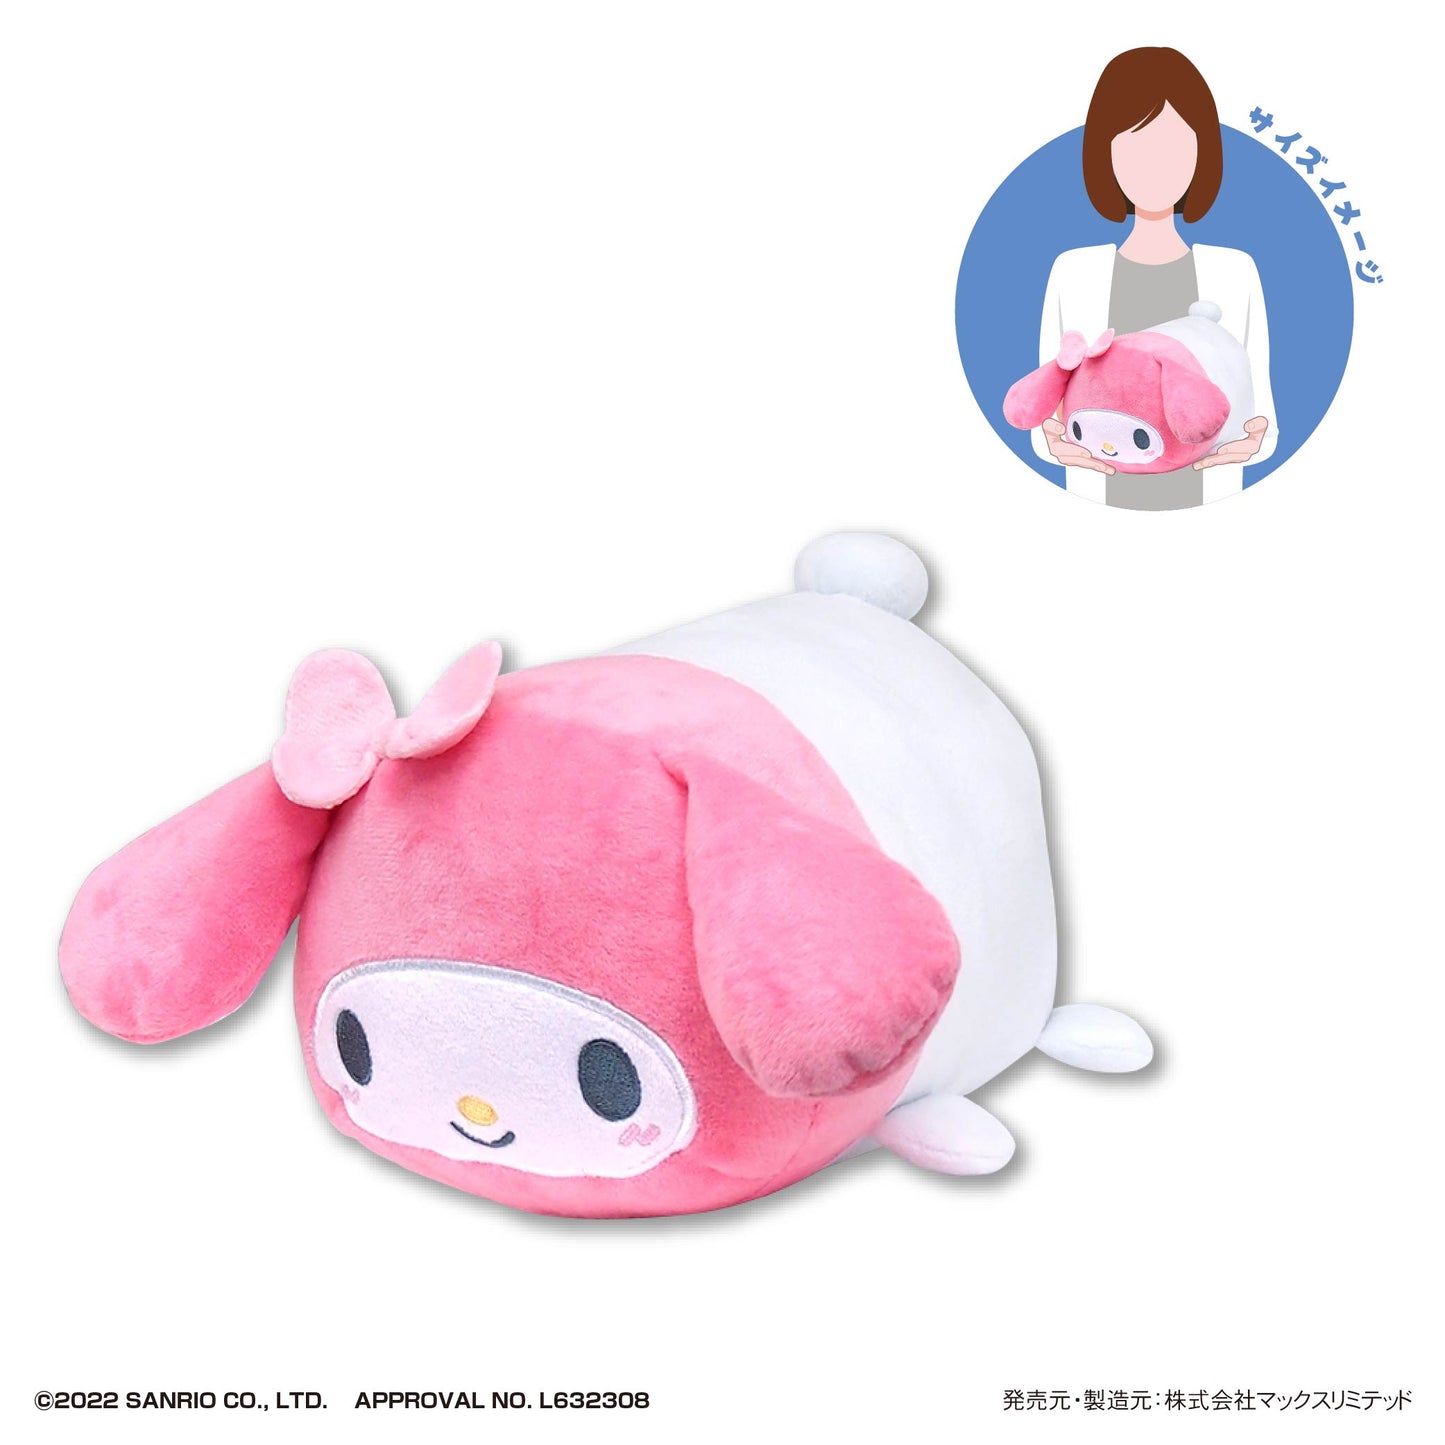 【Resale】SR-97 Sanrio Characters Potekoro Mascot (M Size) C My Melody, Stuffed Animals, animota